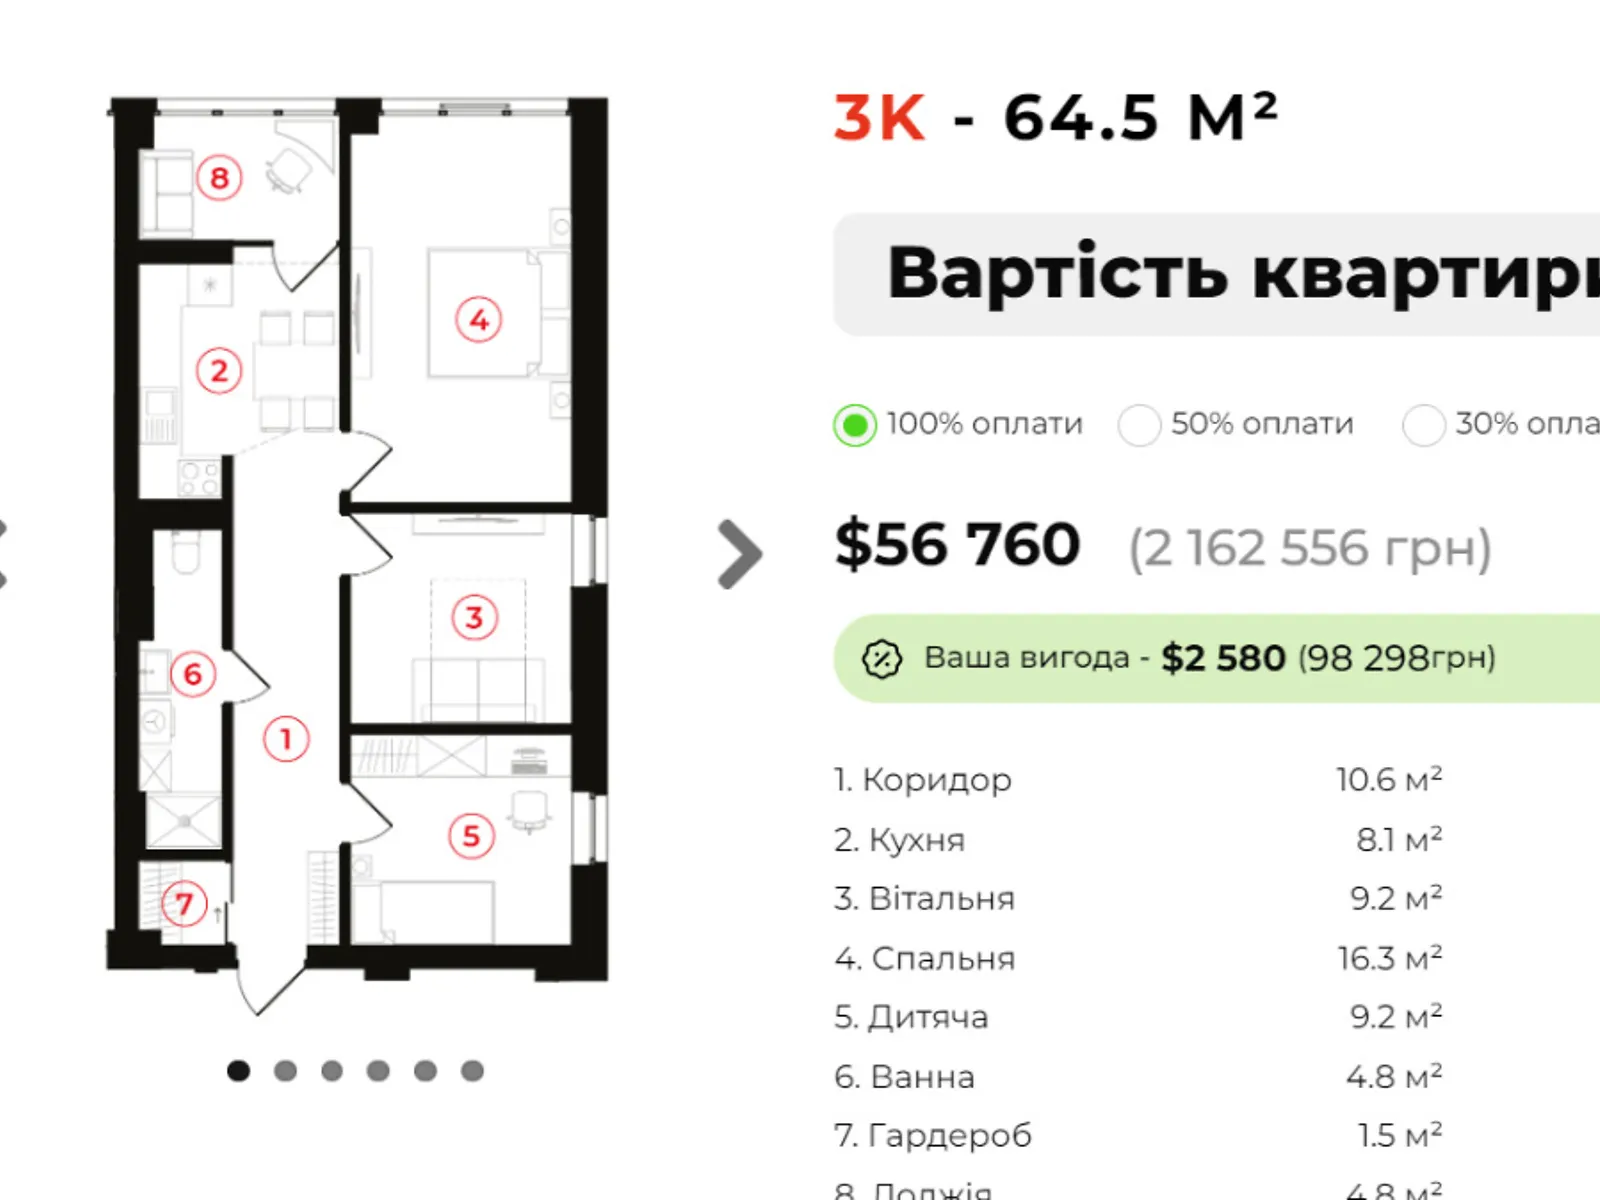 Продается 3-комнатная квартира 64.5 кв. м в Ивано-Франковске - фото 1